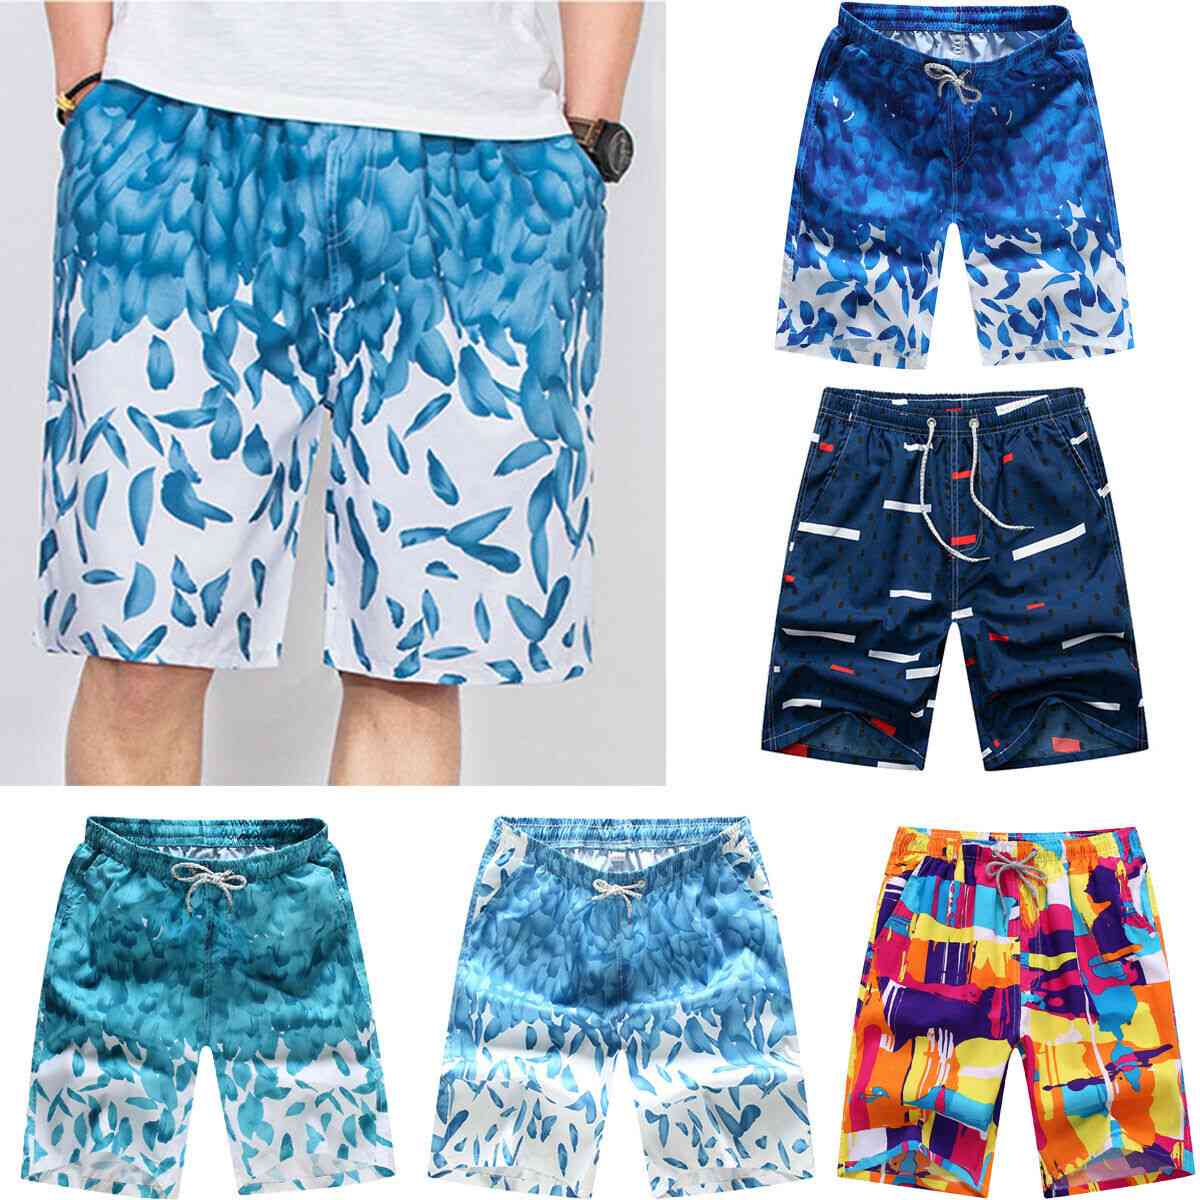 Mænds badebukser strand shorts, sommer sportsbukser åndbar